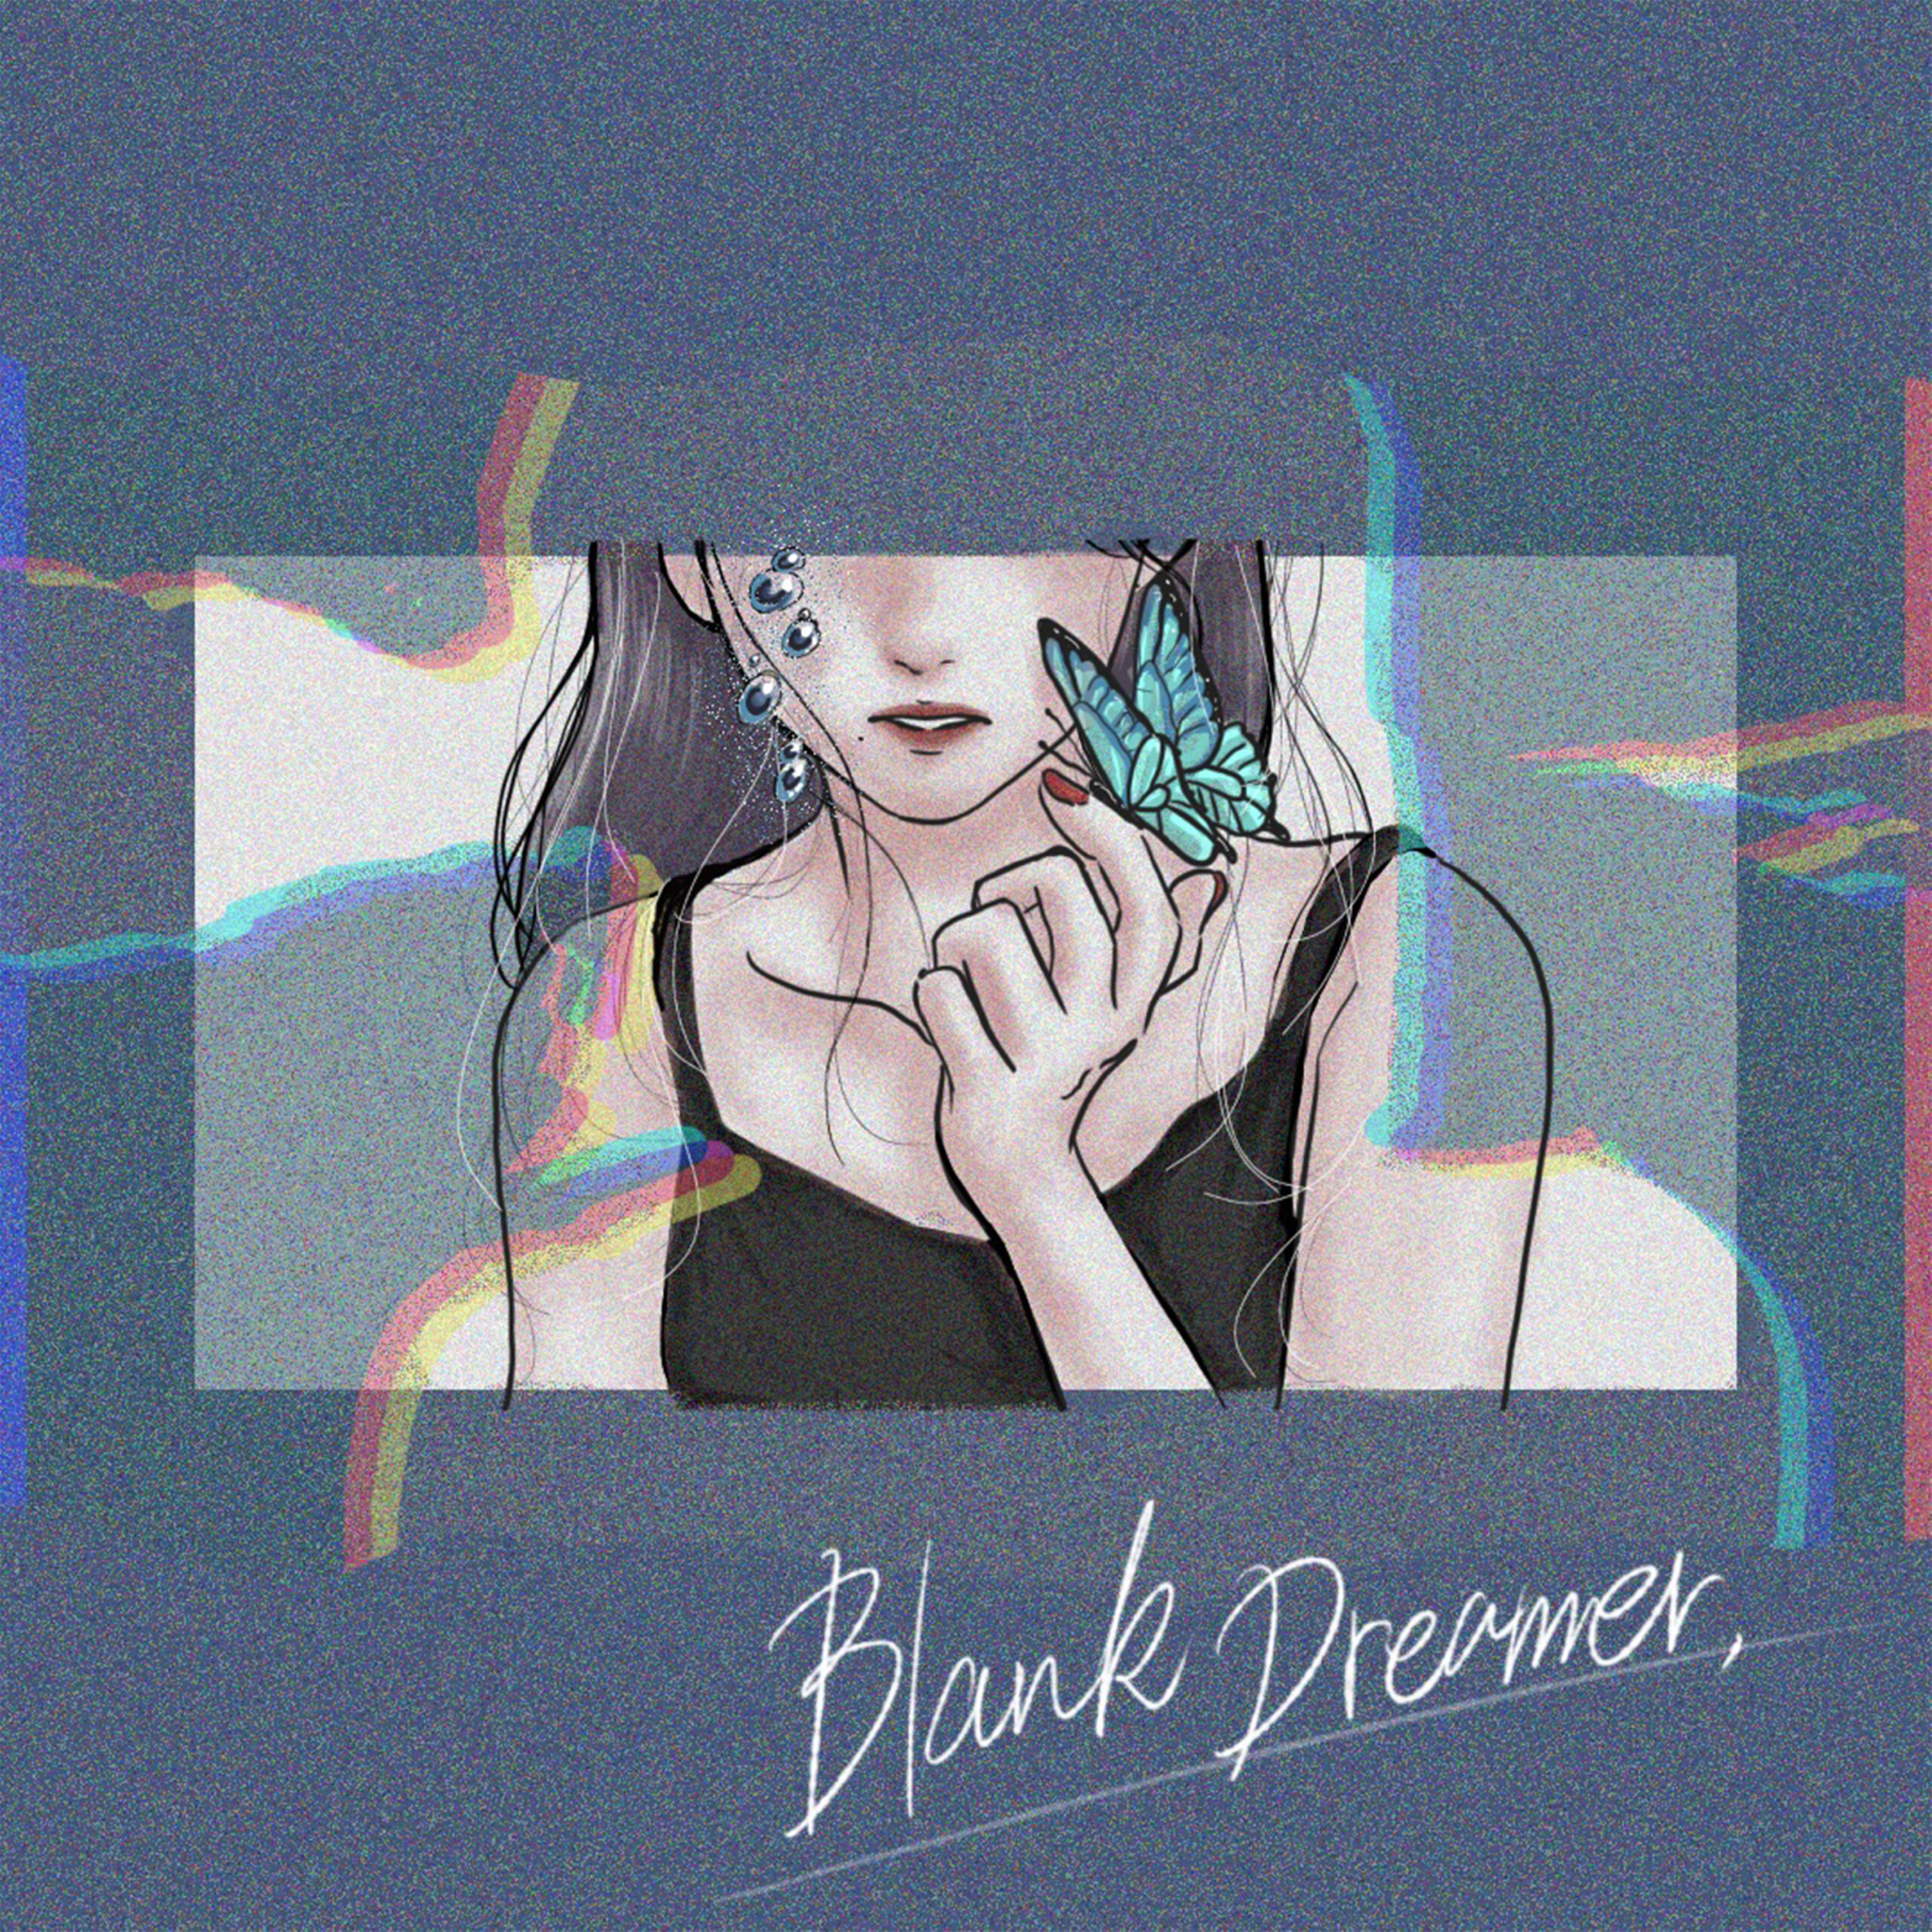 Blank Dreamer